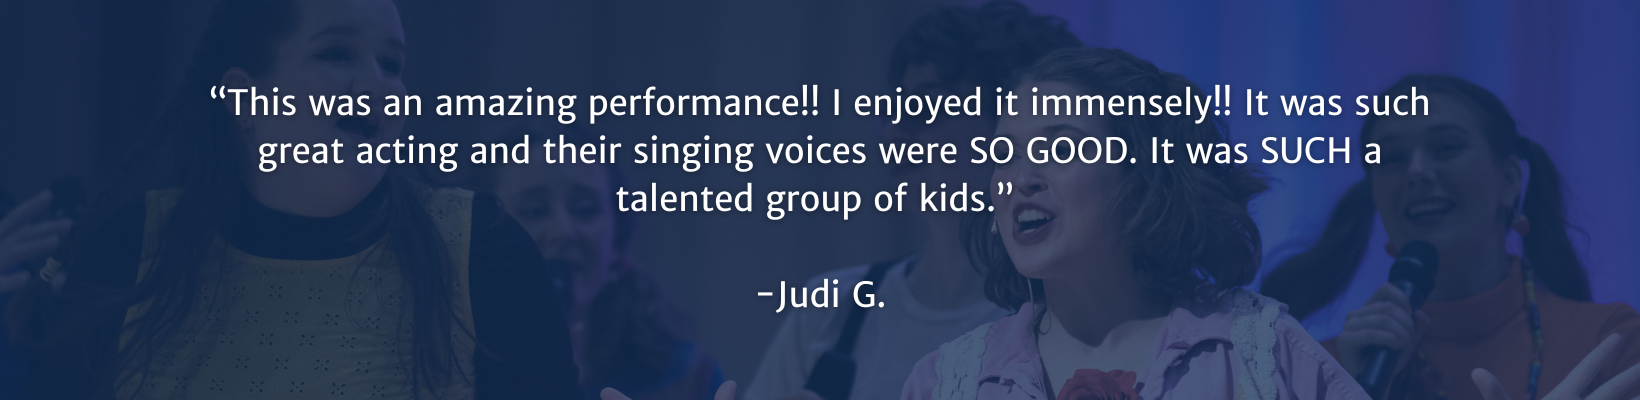 Servant Stage Review_Judi G.